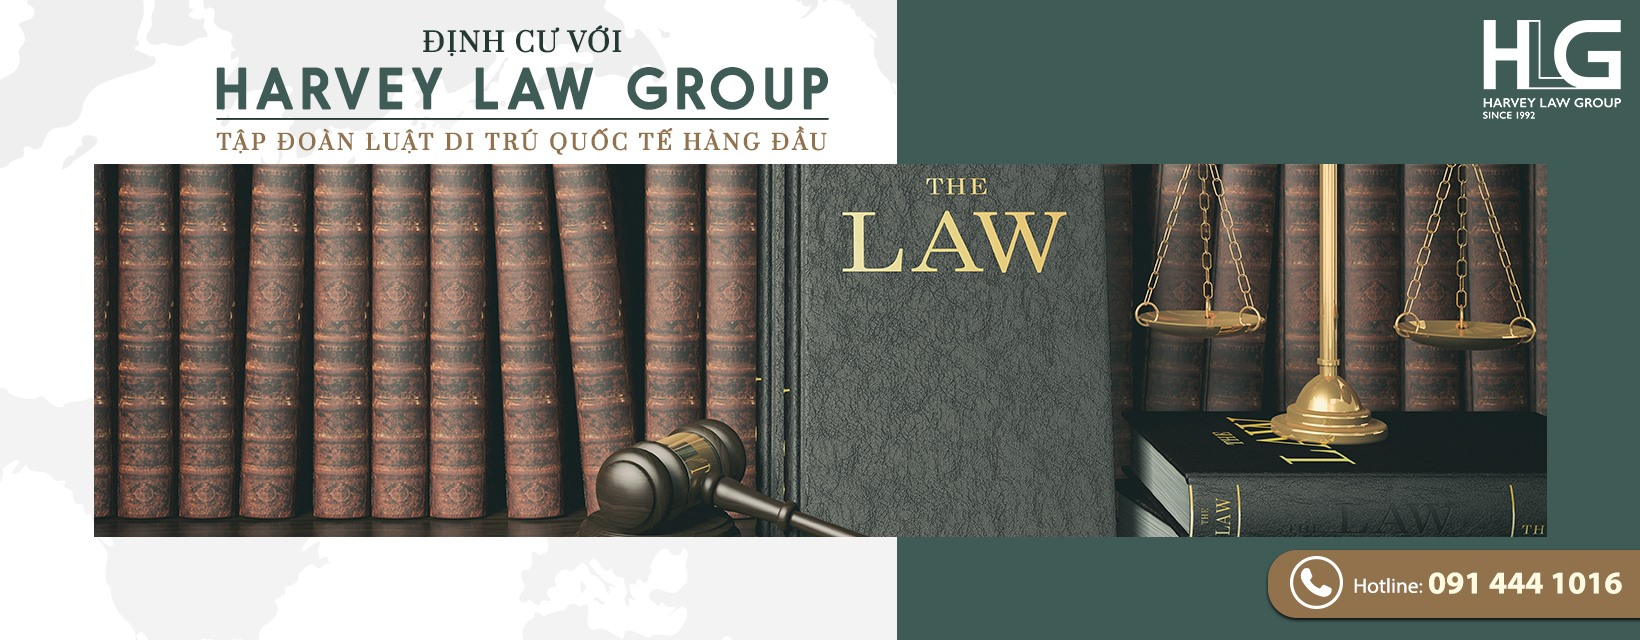 Harvey Law Group ảnh 1